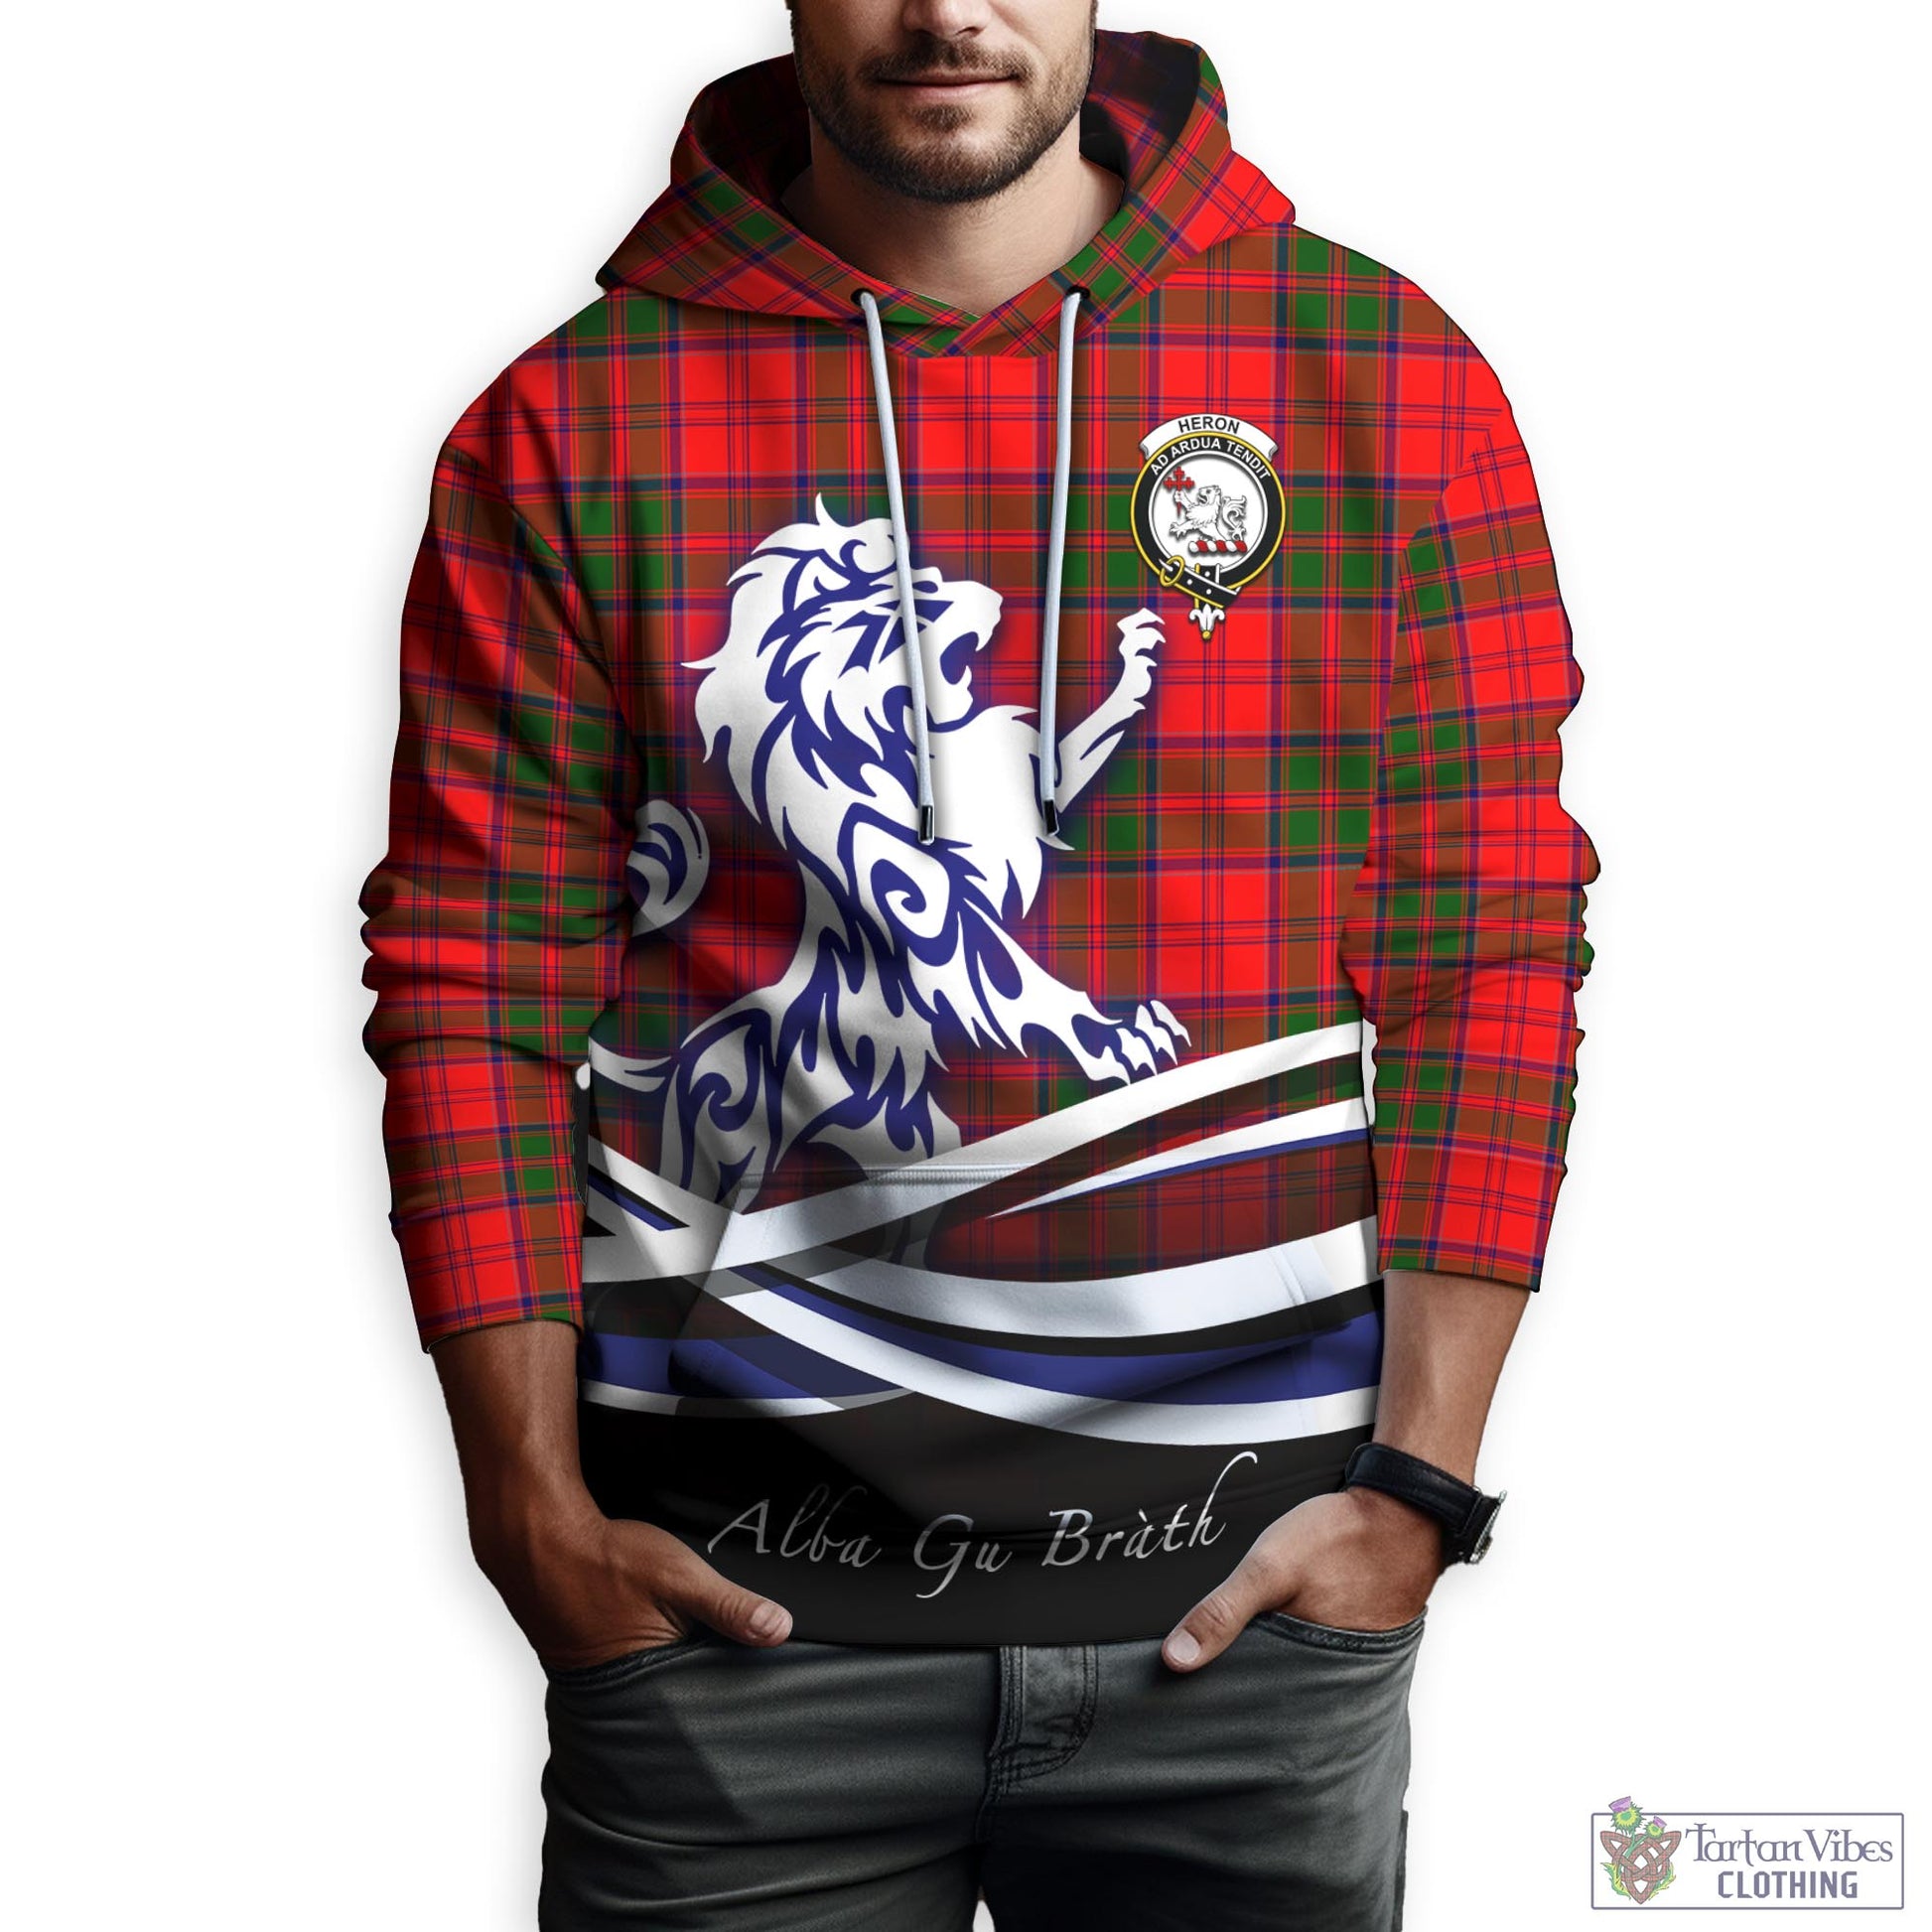 heron-tartan-hoodie-with-alba-gu-brath-regal-lion-emblem